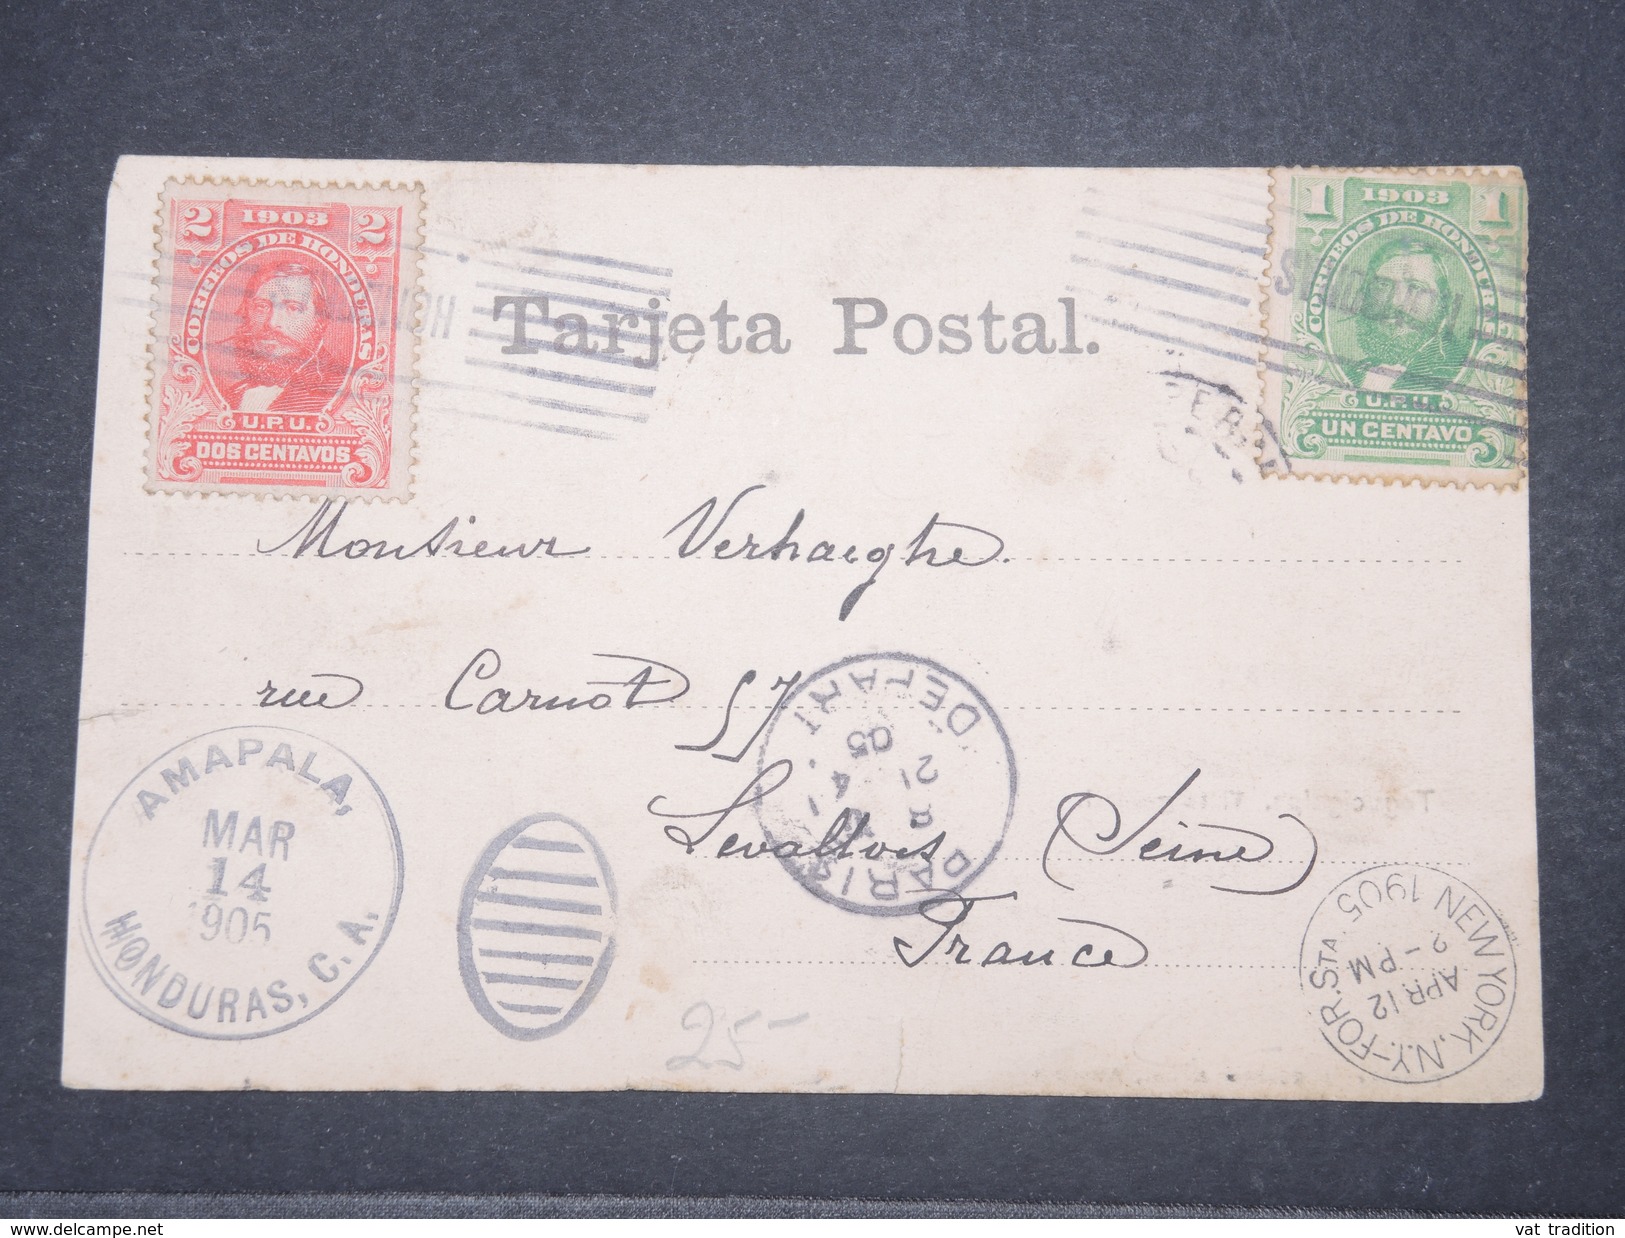 HONDURAS - Carte Postale De Tegucigalpa Pour La France En 1905 Via New York - L 9653 - Honduras